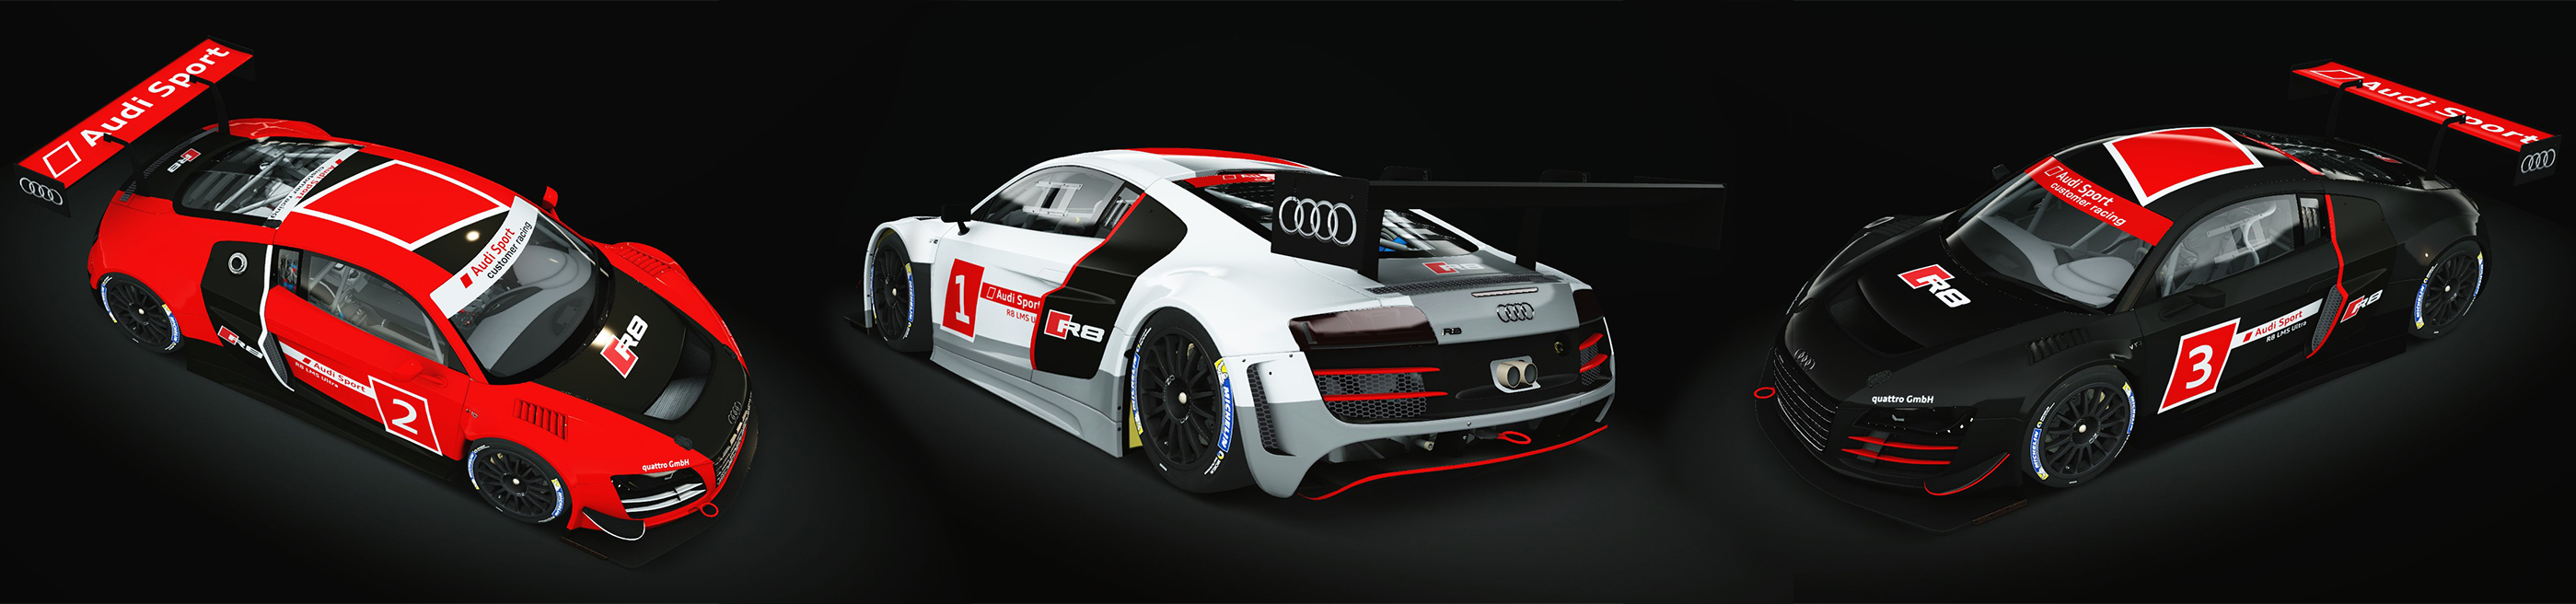 Audi-Sport-Skinpack2.jpg